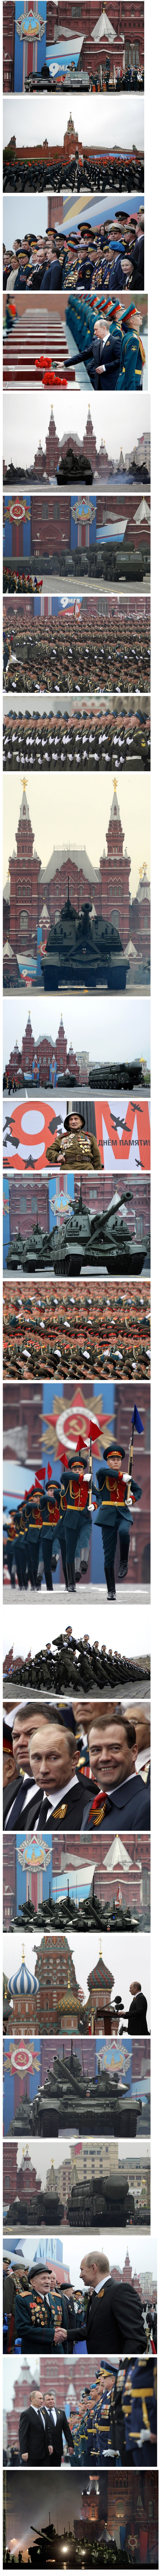 1 (7).jpg : 러시아 군대의 위엄.jpg